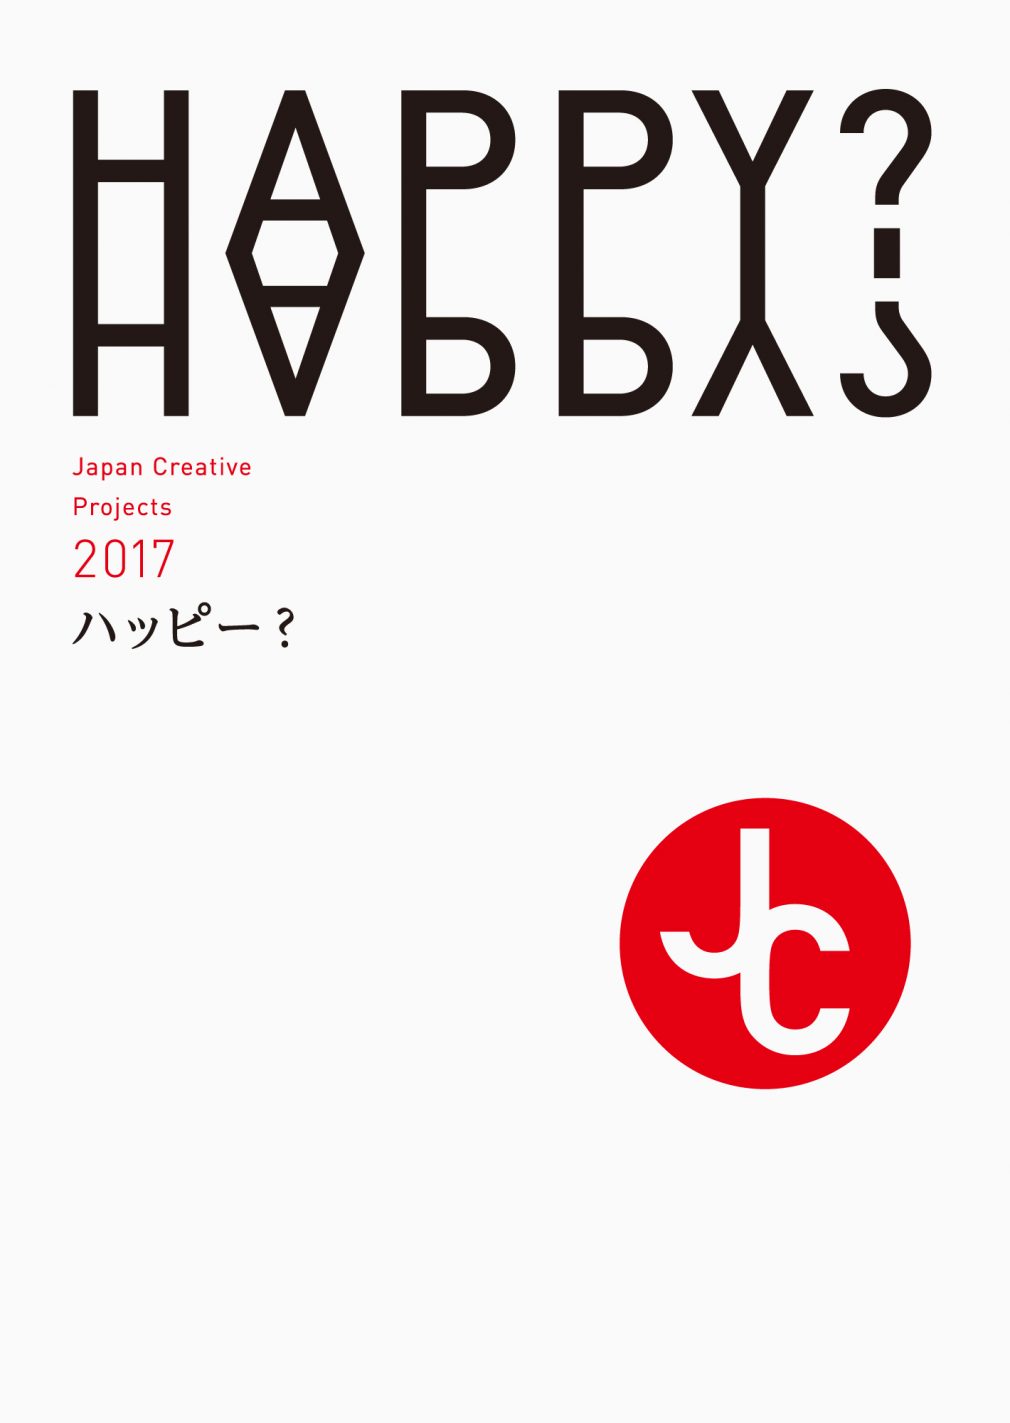 “Japan Creative” Talk Session 2017